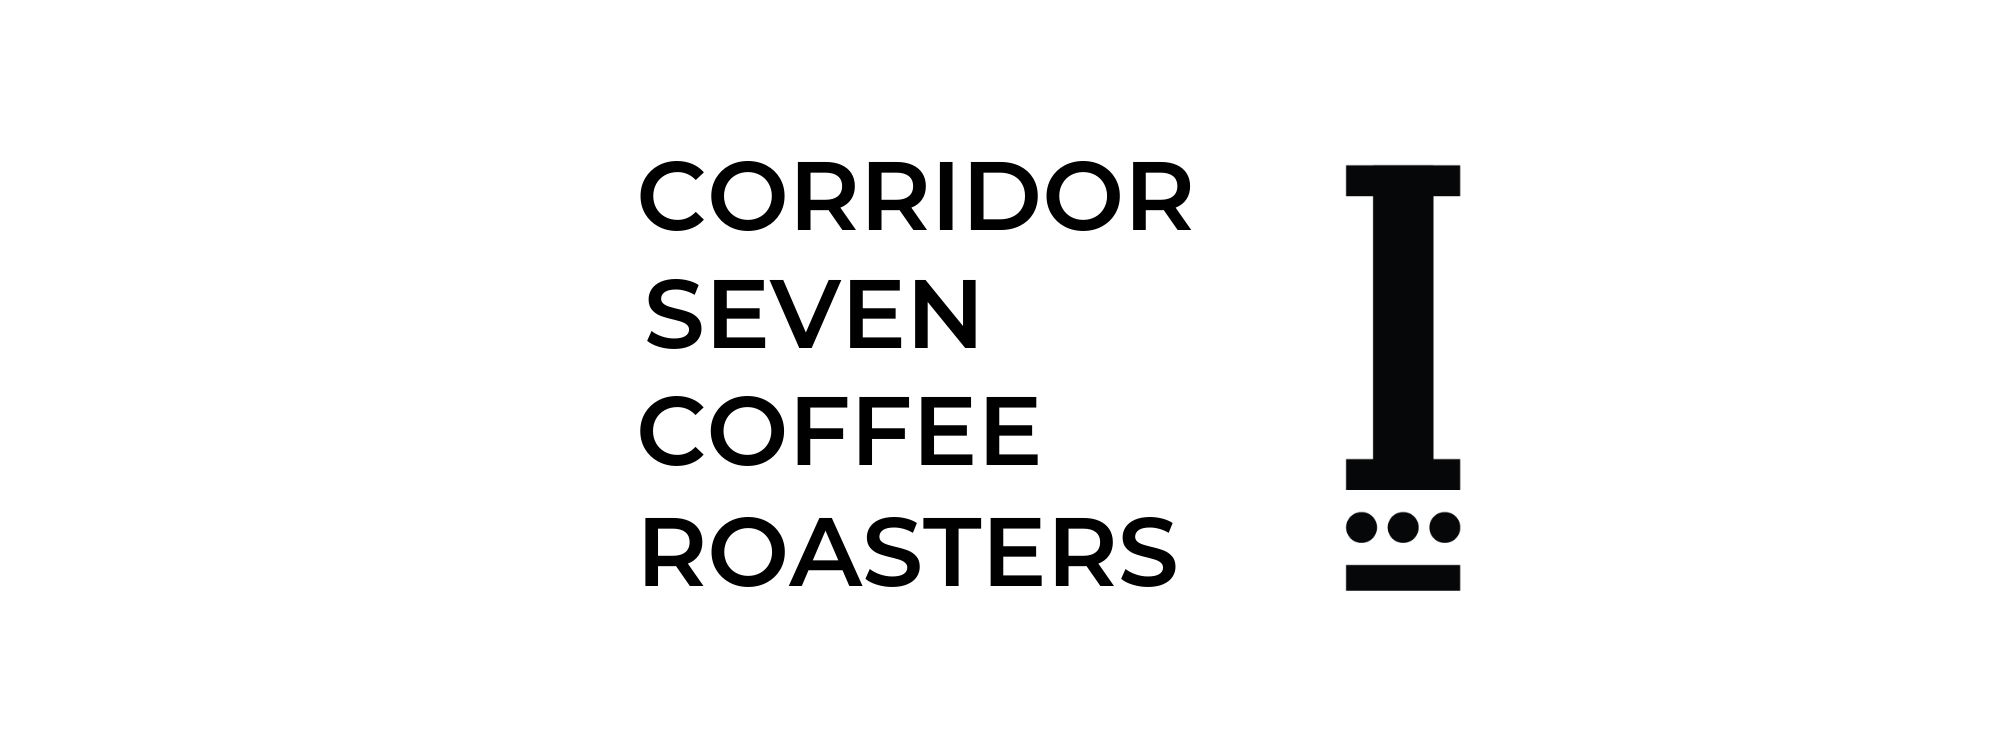 Corridor Seven Coffee Roasters